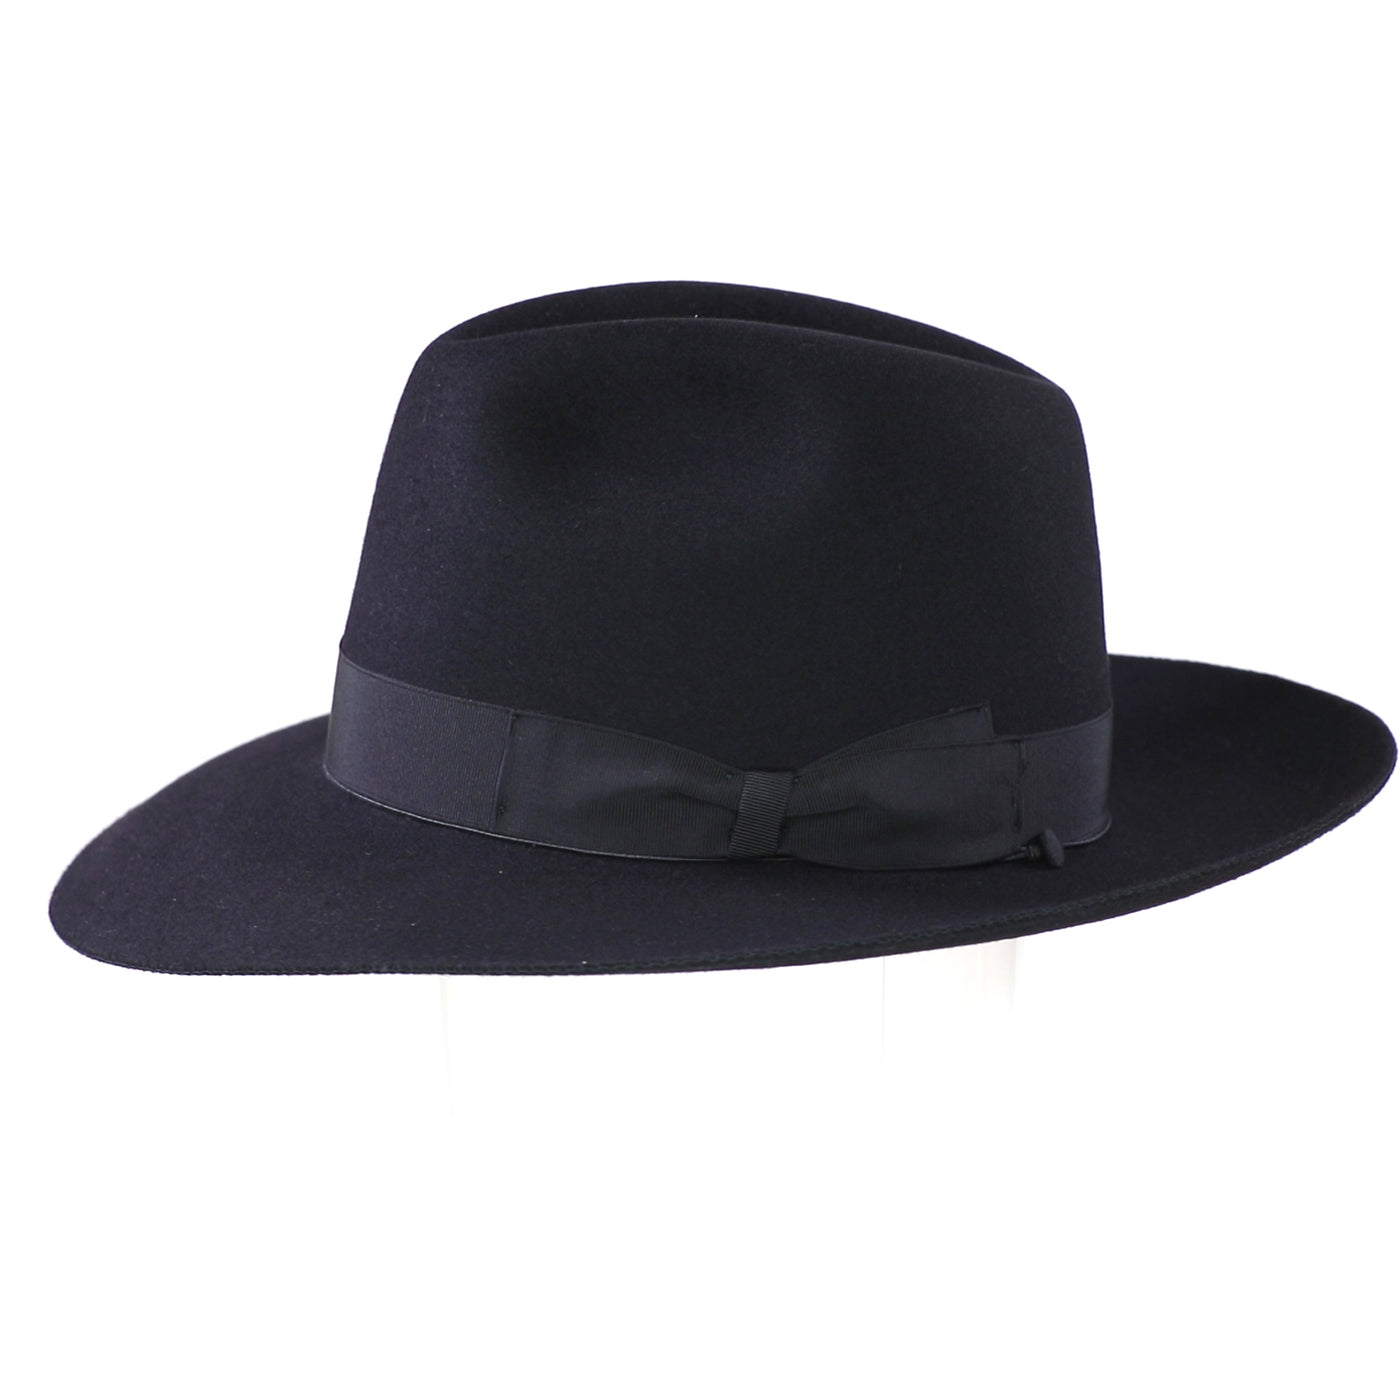 Mattoni 314 - Black, product_type] - Borsalino for Atica fedora hat